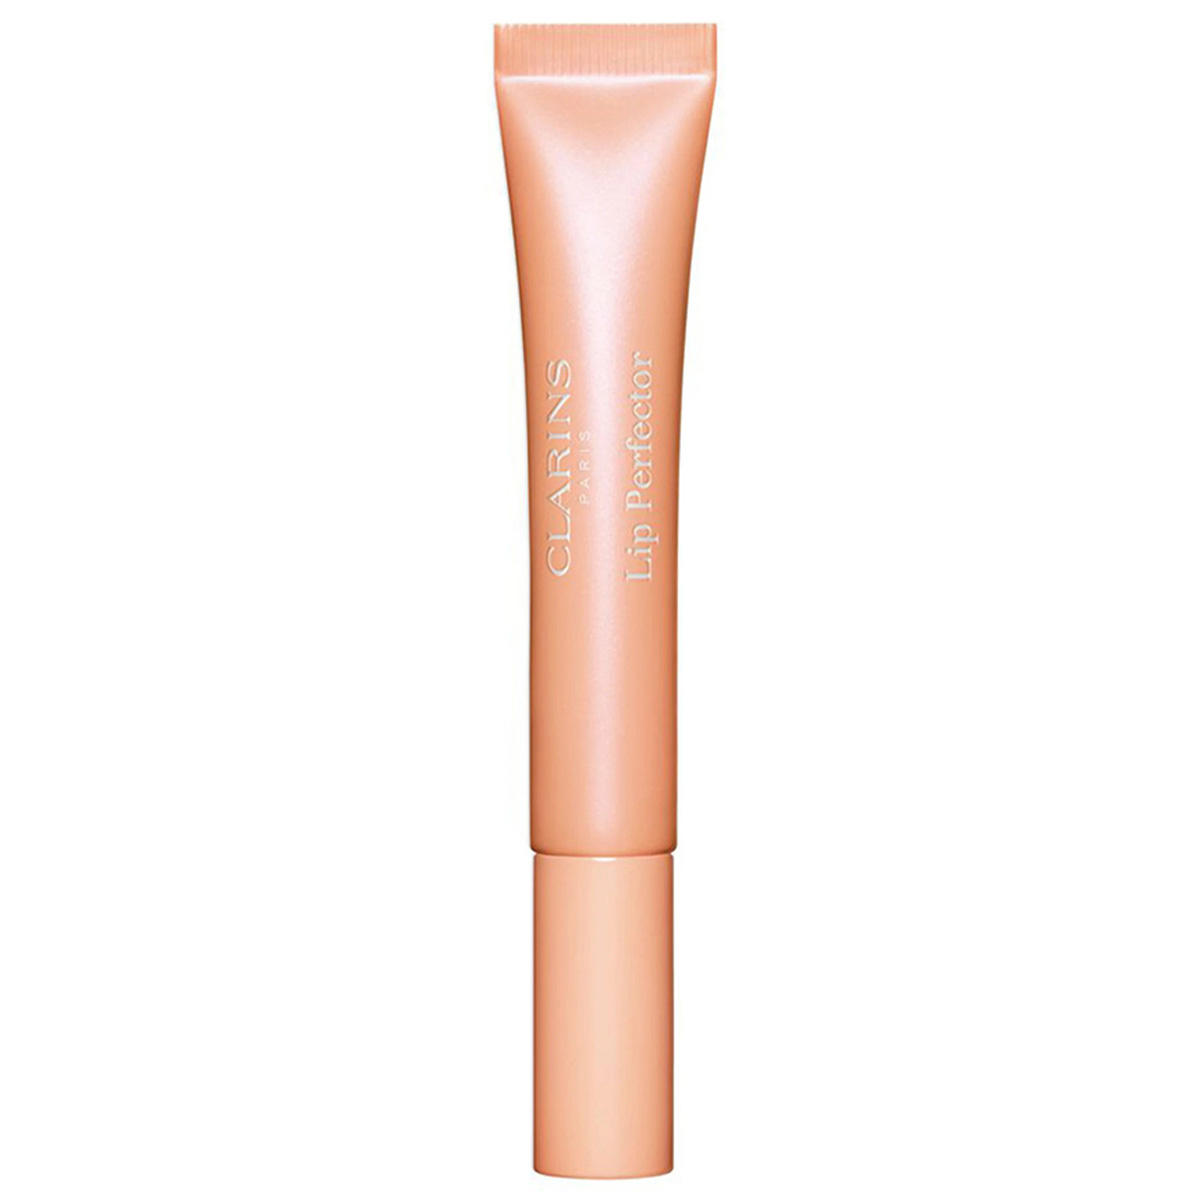 CLARINS Natural Lip Perfector 02 Apricot Shimmer, 12 ml - 1